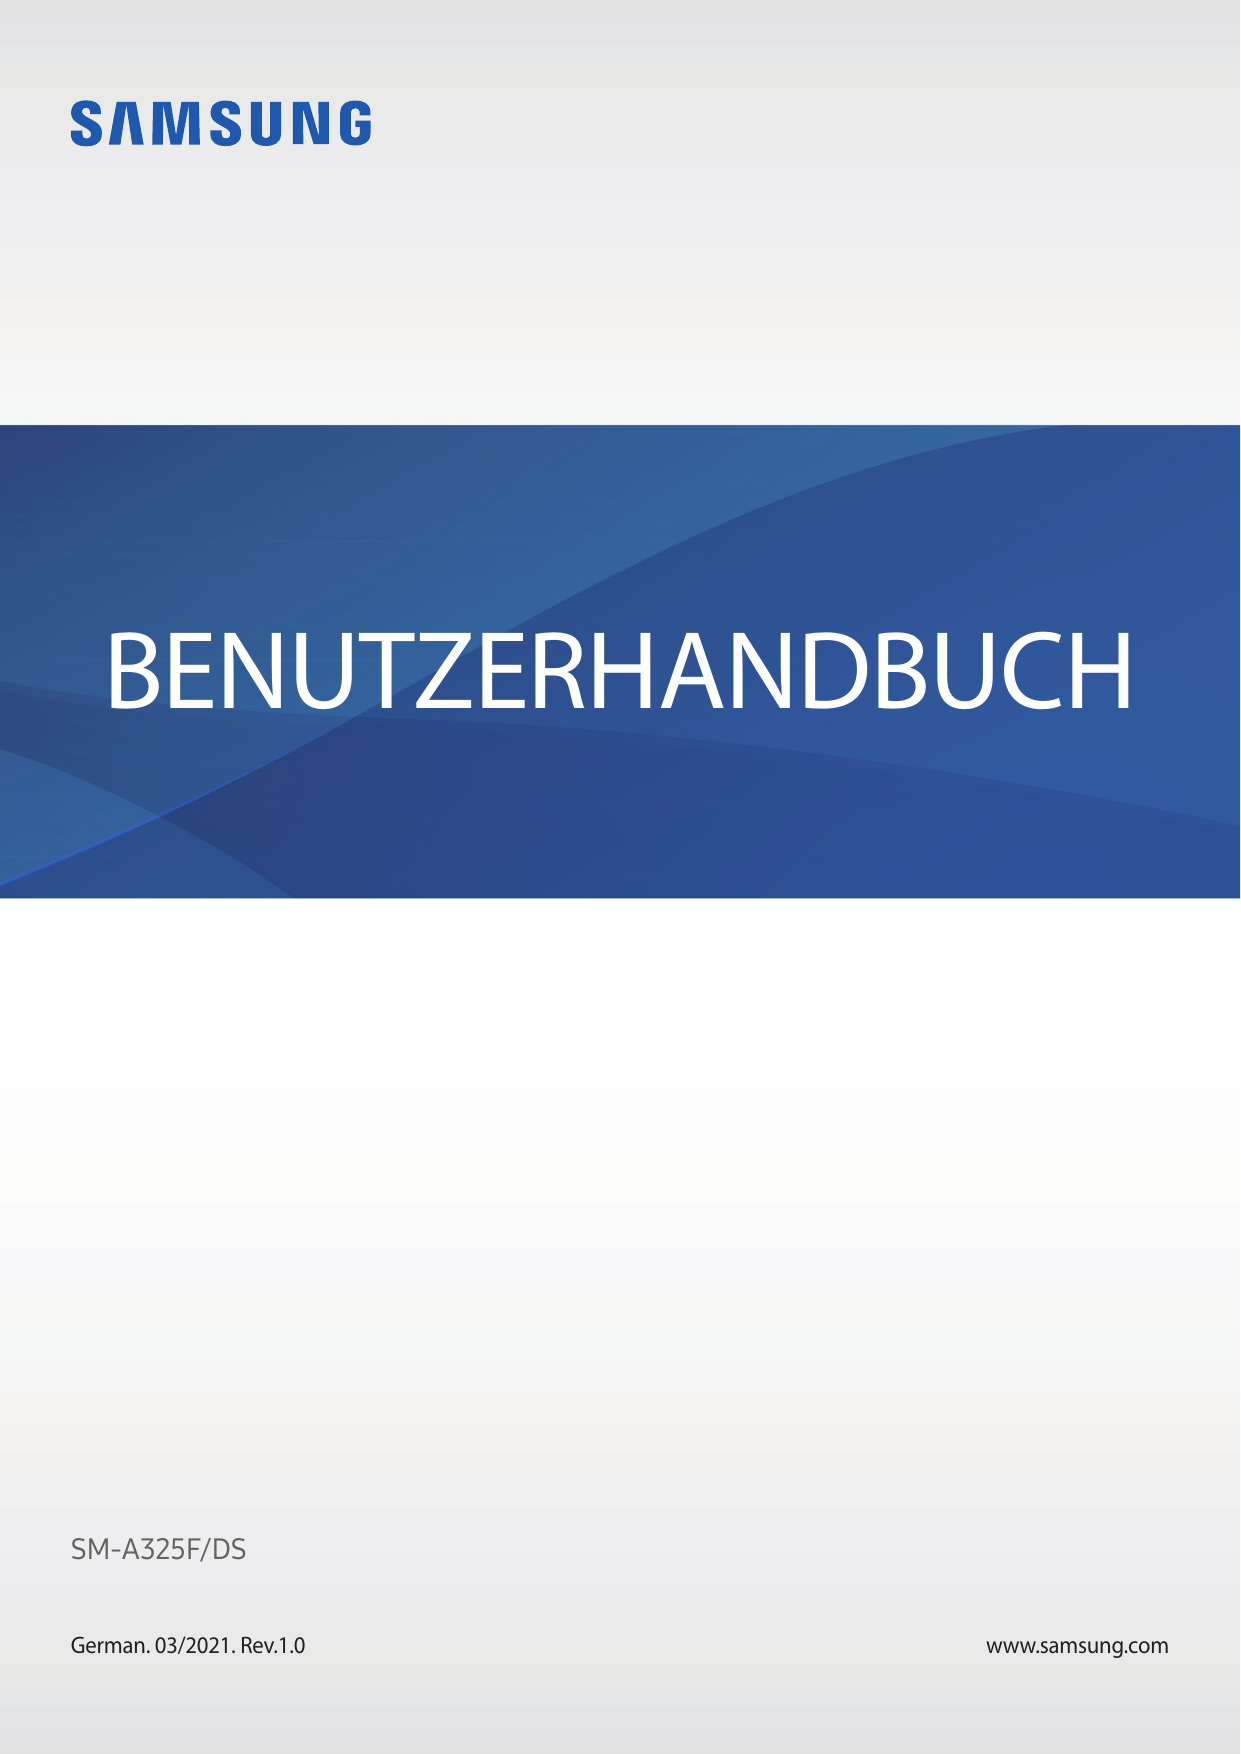 BENUTZERHANDBUCHSM-A325F/DSGerman. 03/2021. Rev.1.0www.samsung.com